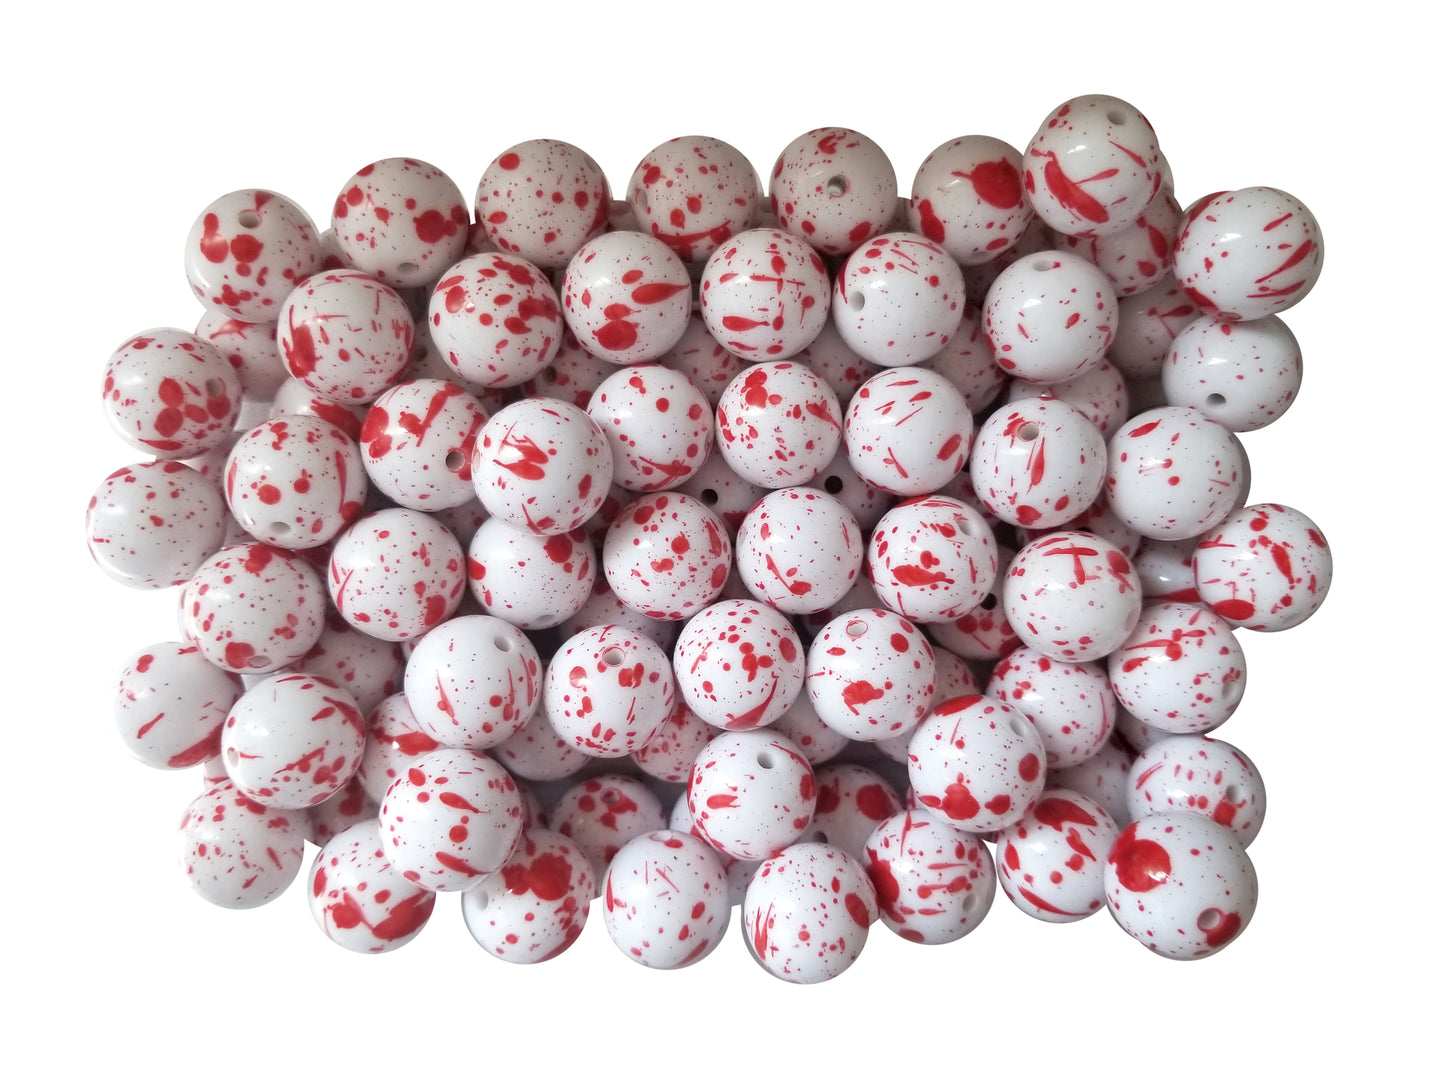 blood splatter halloween 20mm printed wholesale bubblegum beads